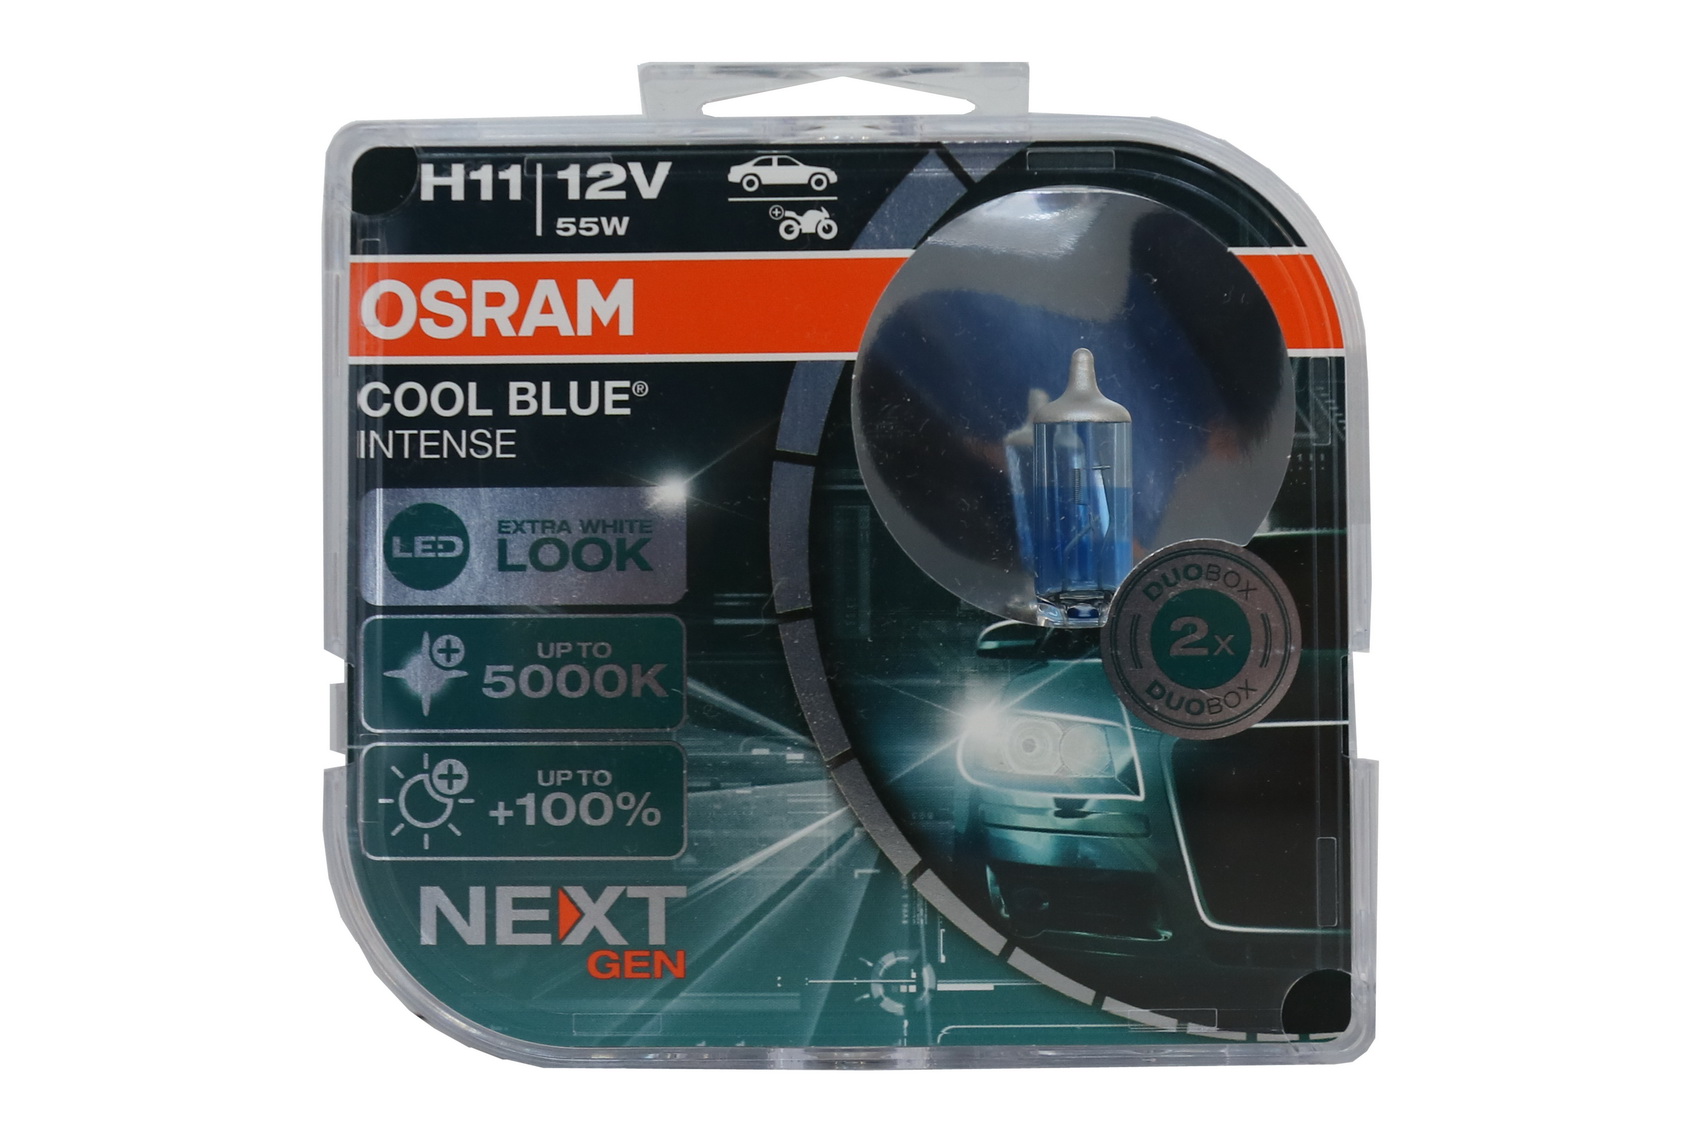 OSRAM COOL BLUE INTENSE NEXT GEN H11 halogén fényszóró 64211CBN-HCB 12V, kemény fedeles doboz (2 db)